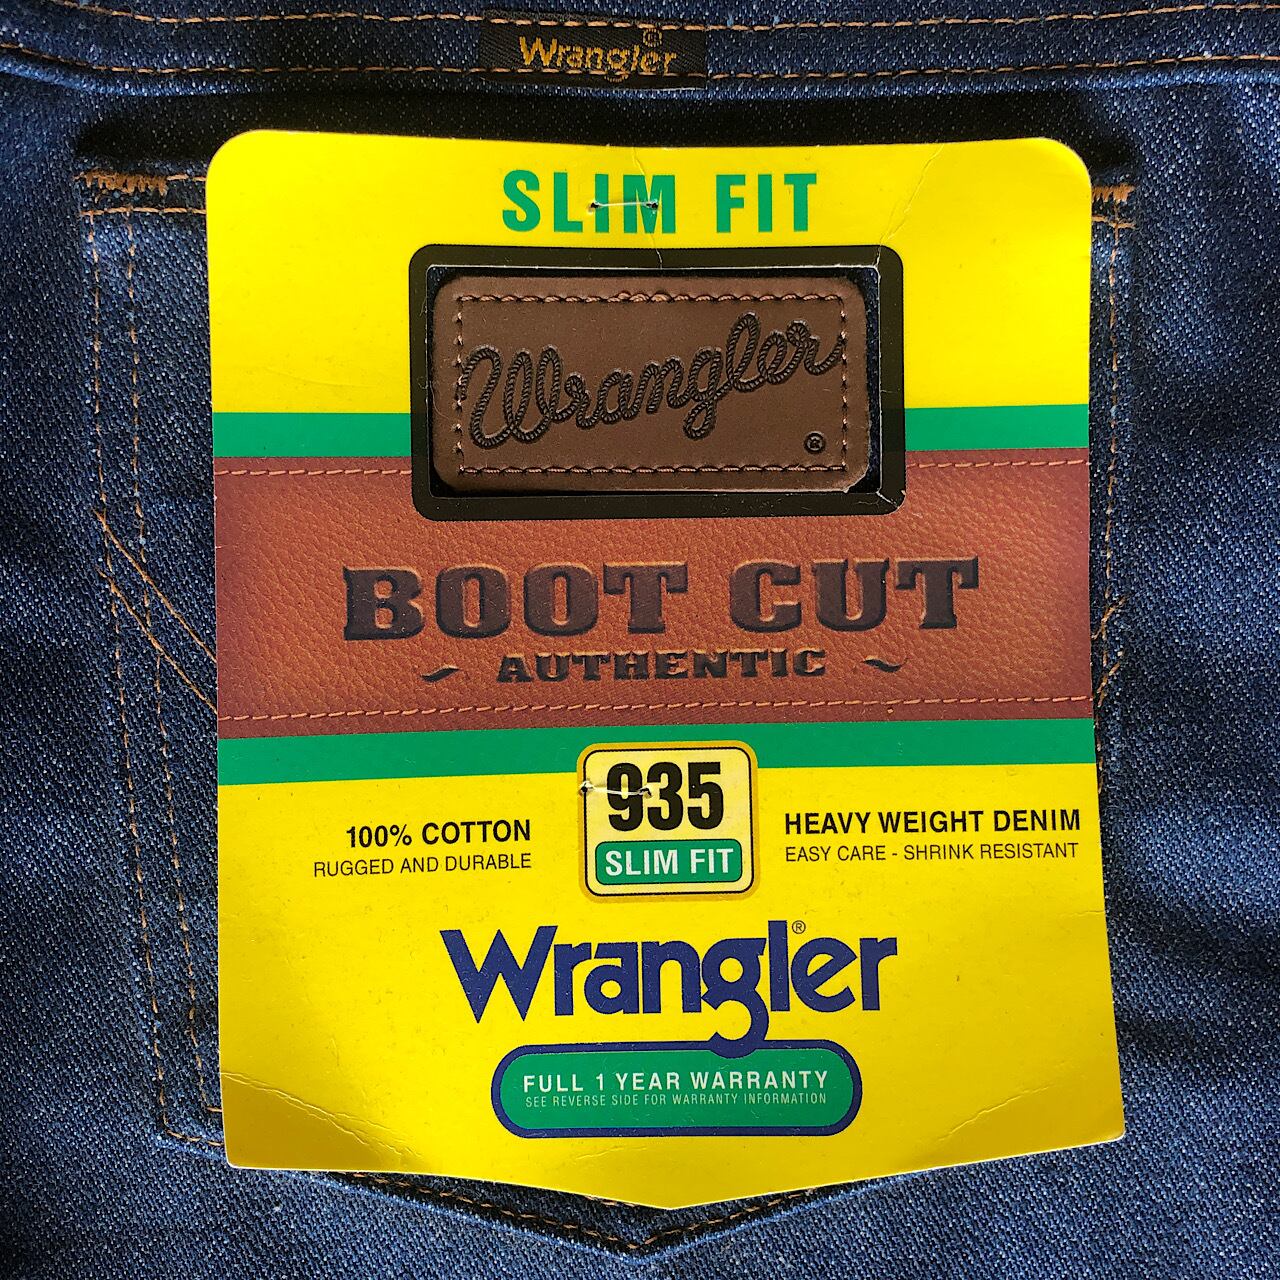 Wrangler Slimfit Bootcut "935"